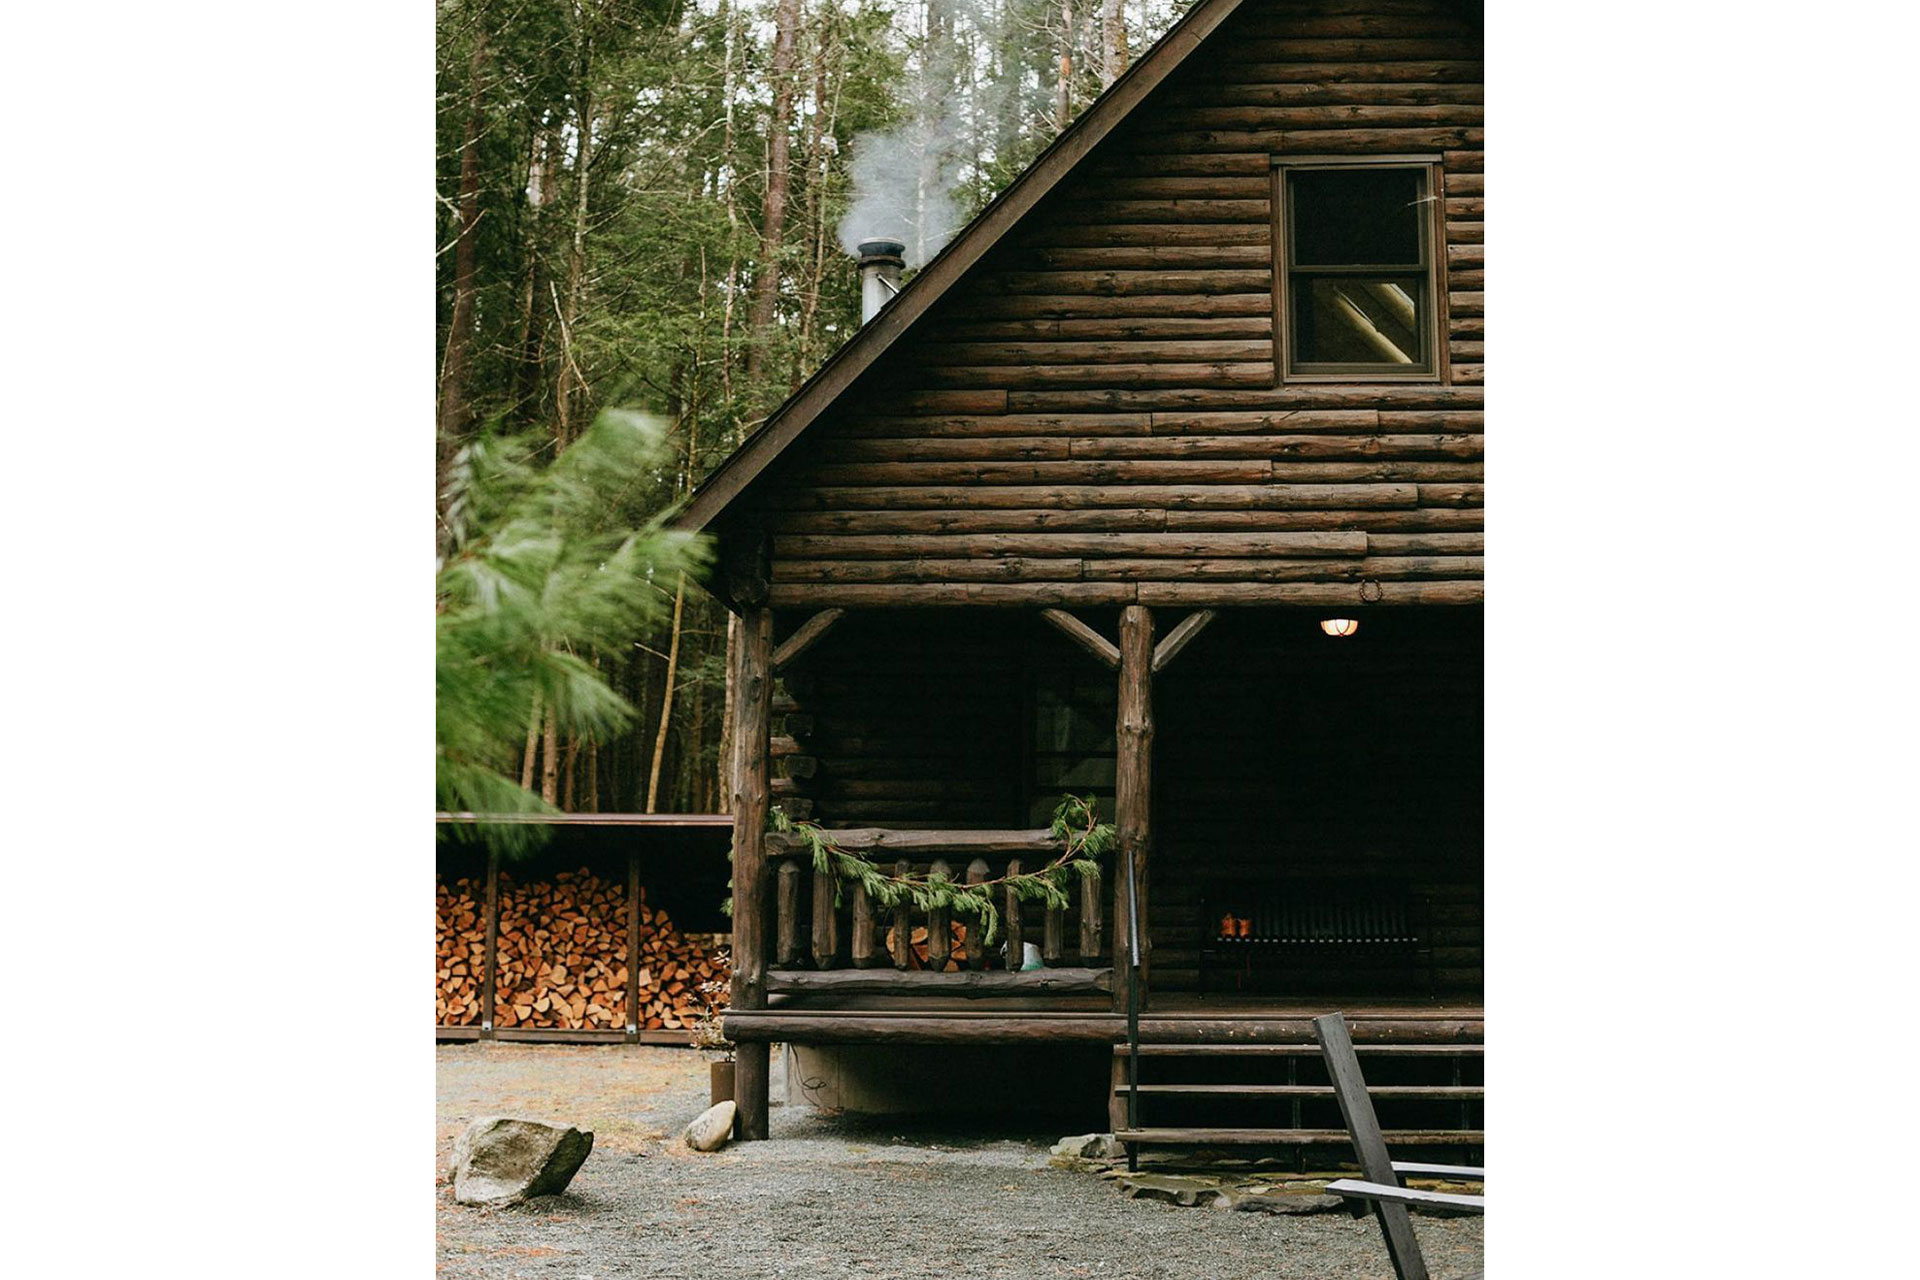 Log cabin in upstate New York